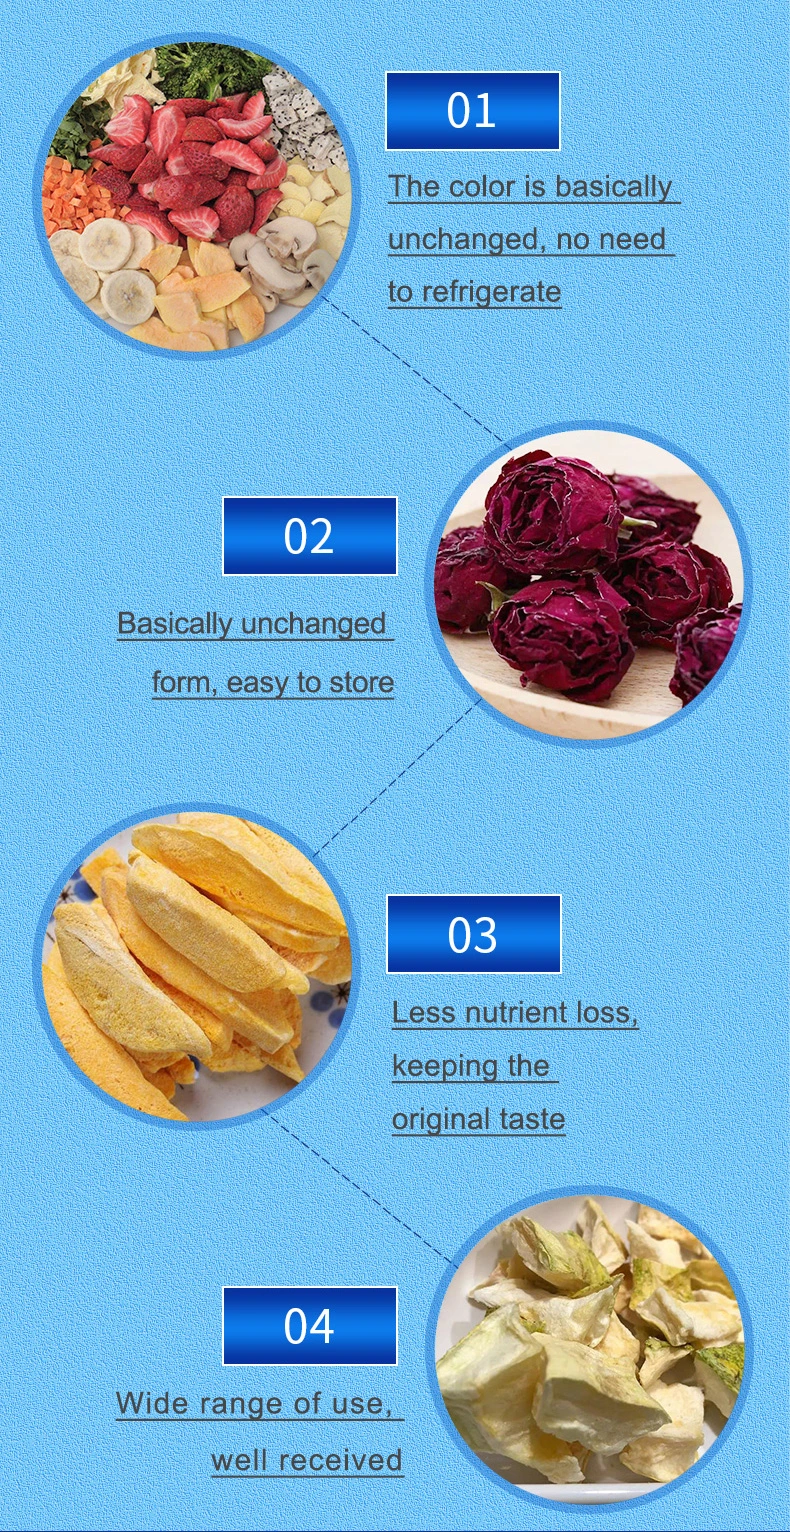 100kg Industrial Freeze-Dried Fruit /Food /Juice Vacuum Freeze Dryer